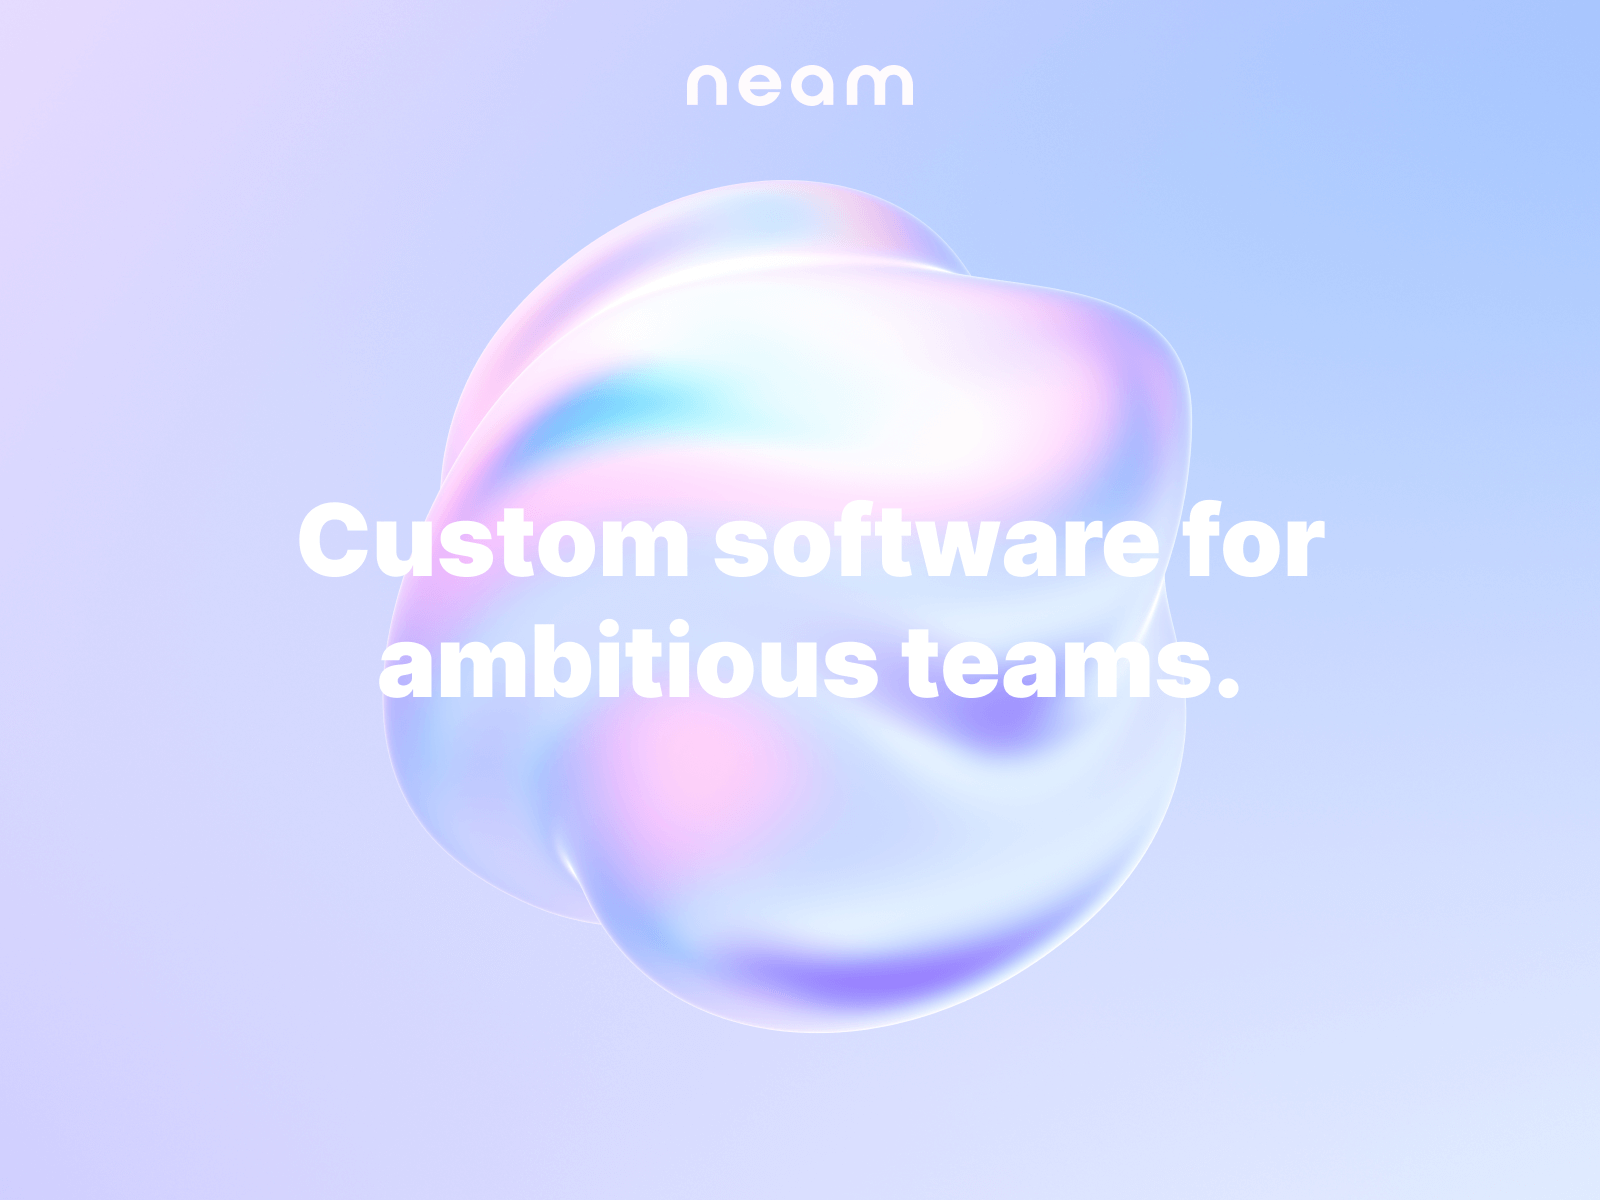 Neam WeWeb developers